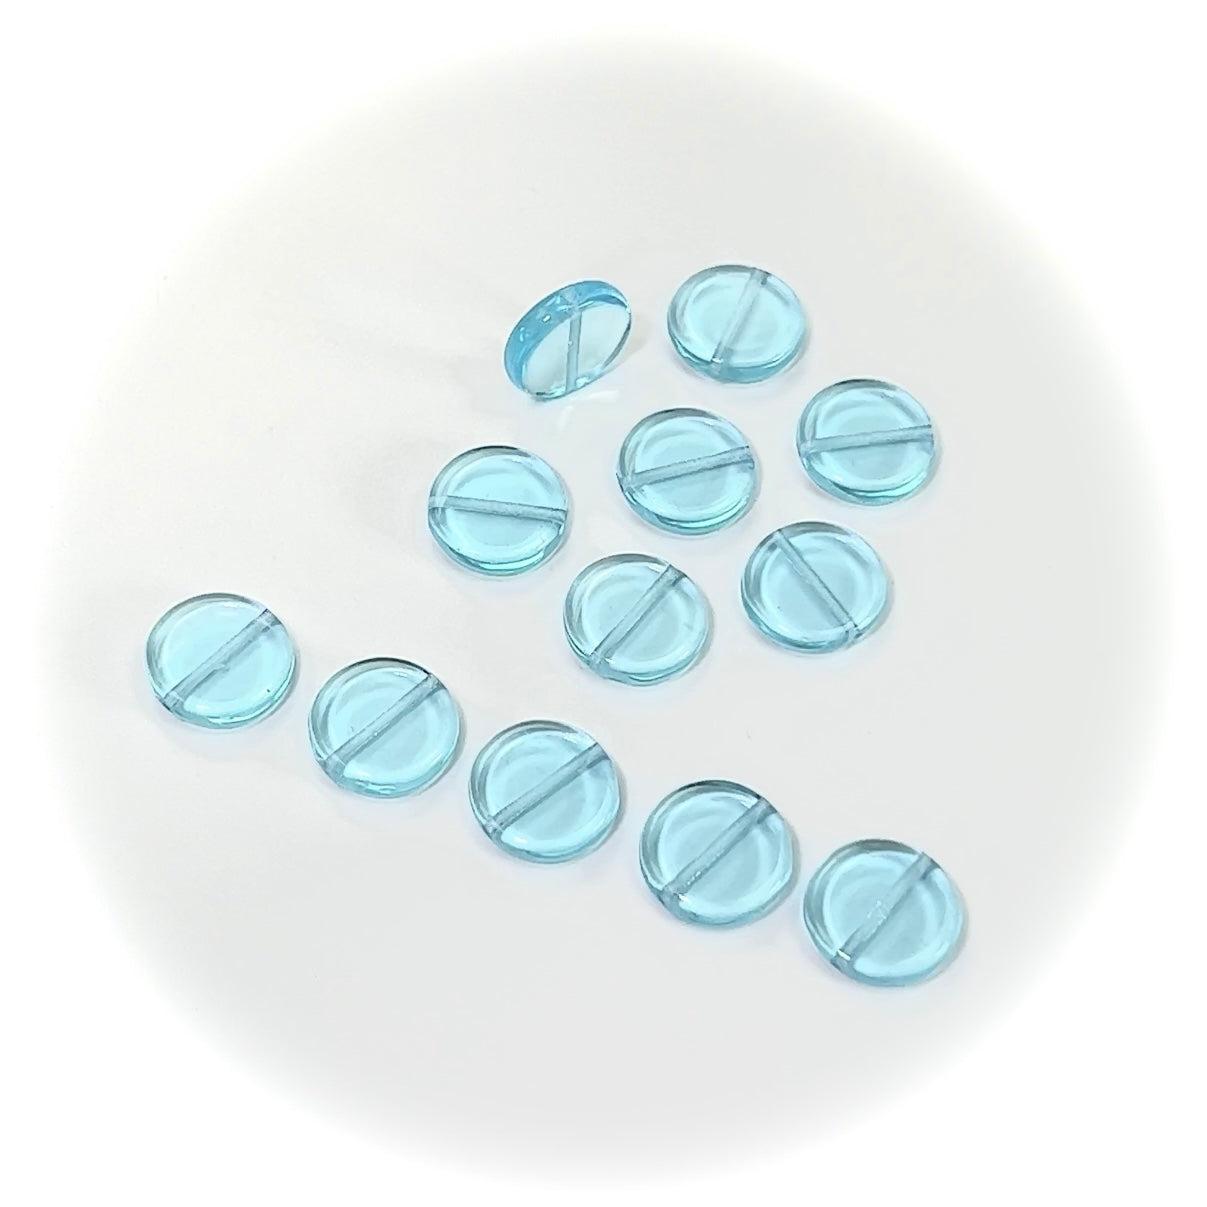 Czech Glass Druk Beads in size 12mm, Flat Disc, Aqua blue color, 50pcs, J080